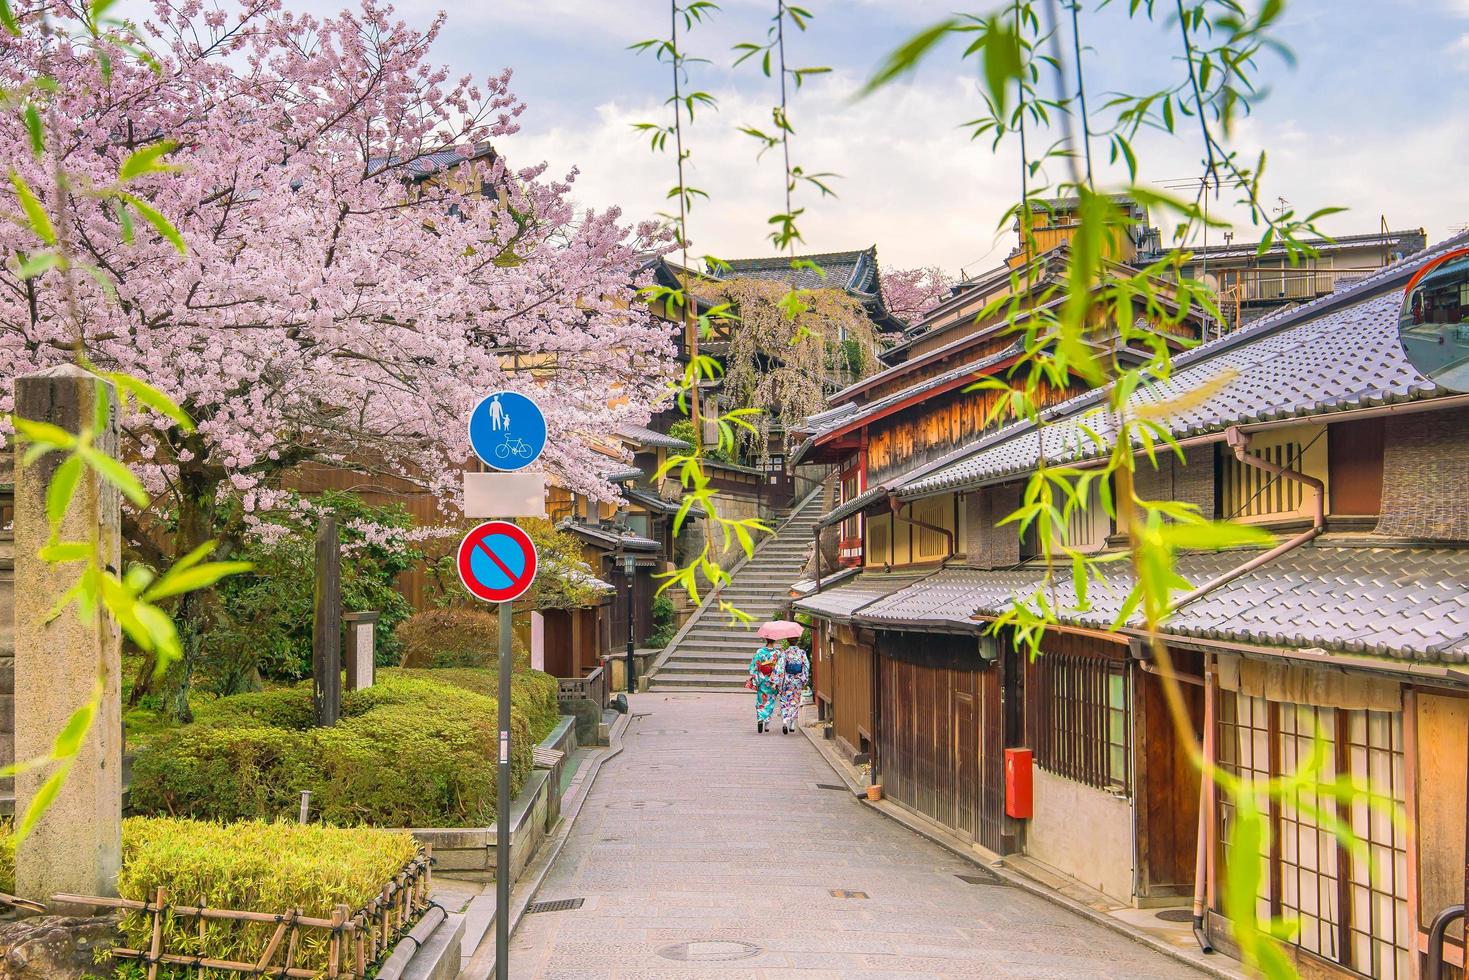 Vieille ville de Kyoto, le quartier de higashiyama pendant la saison des sakura photo